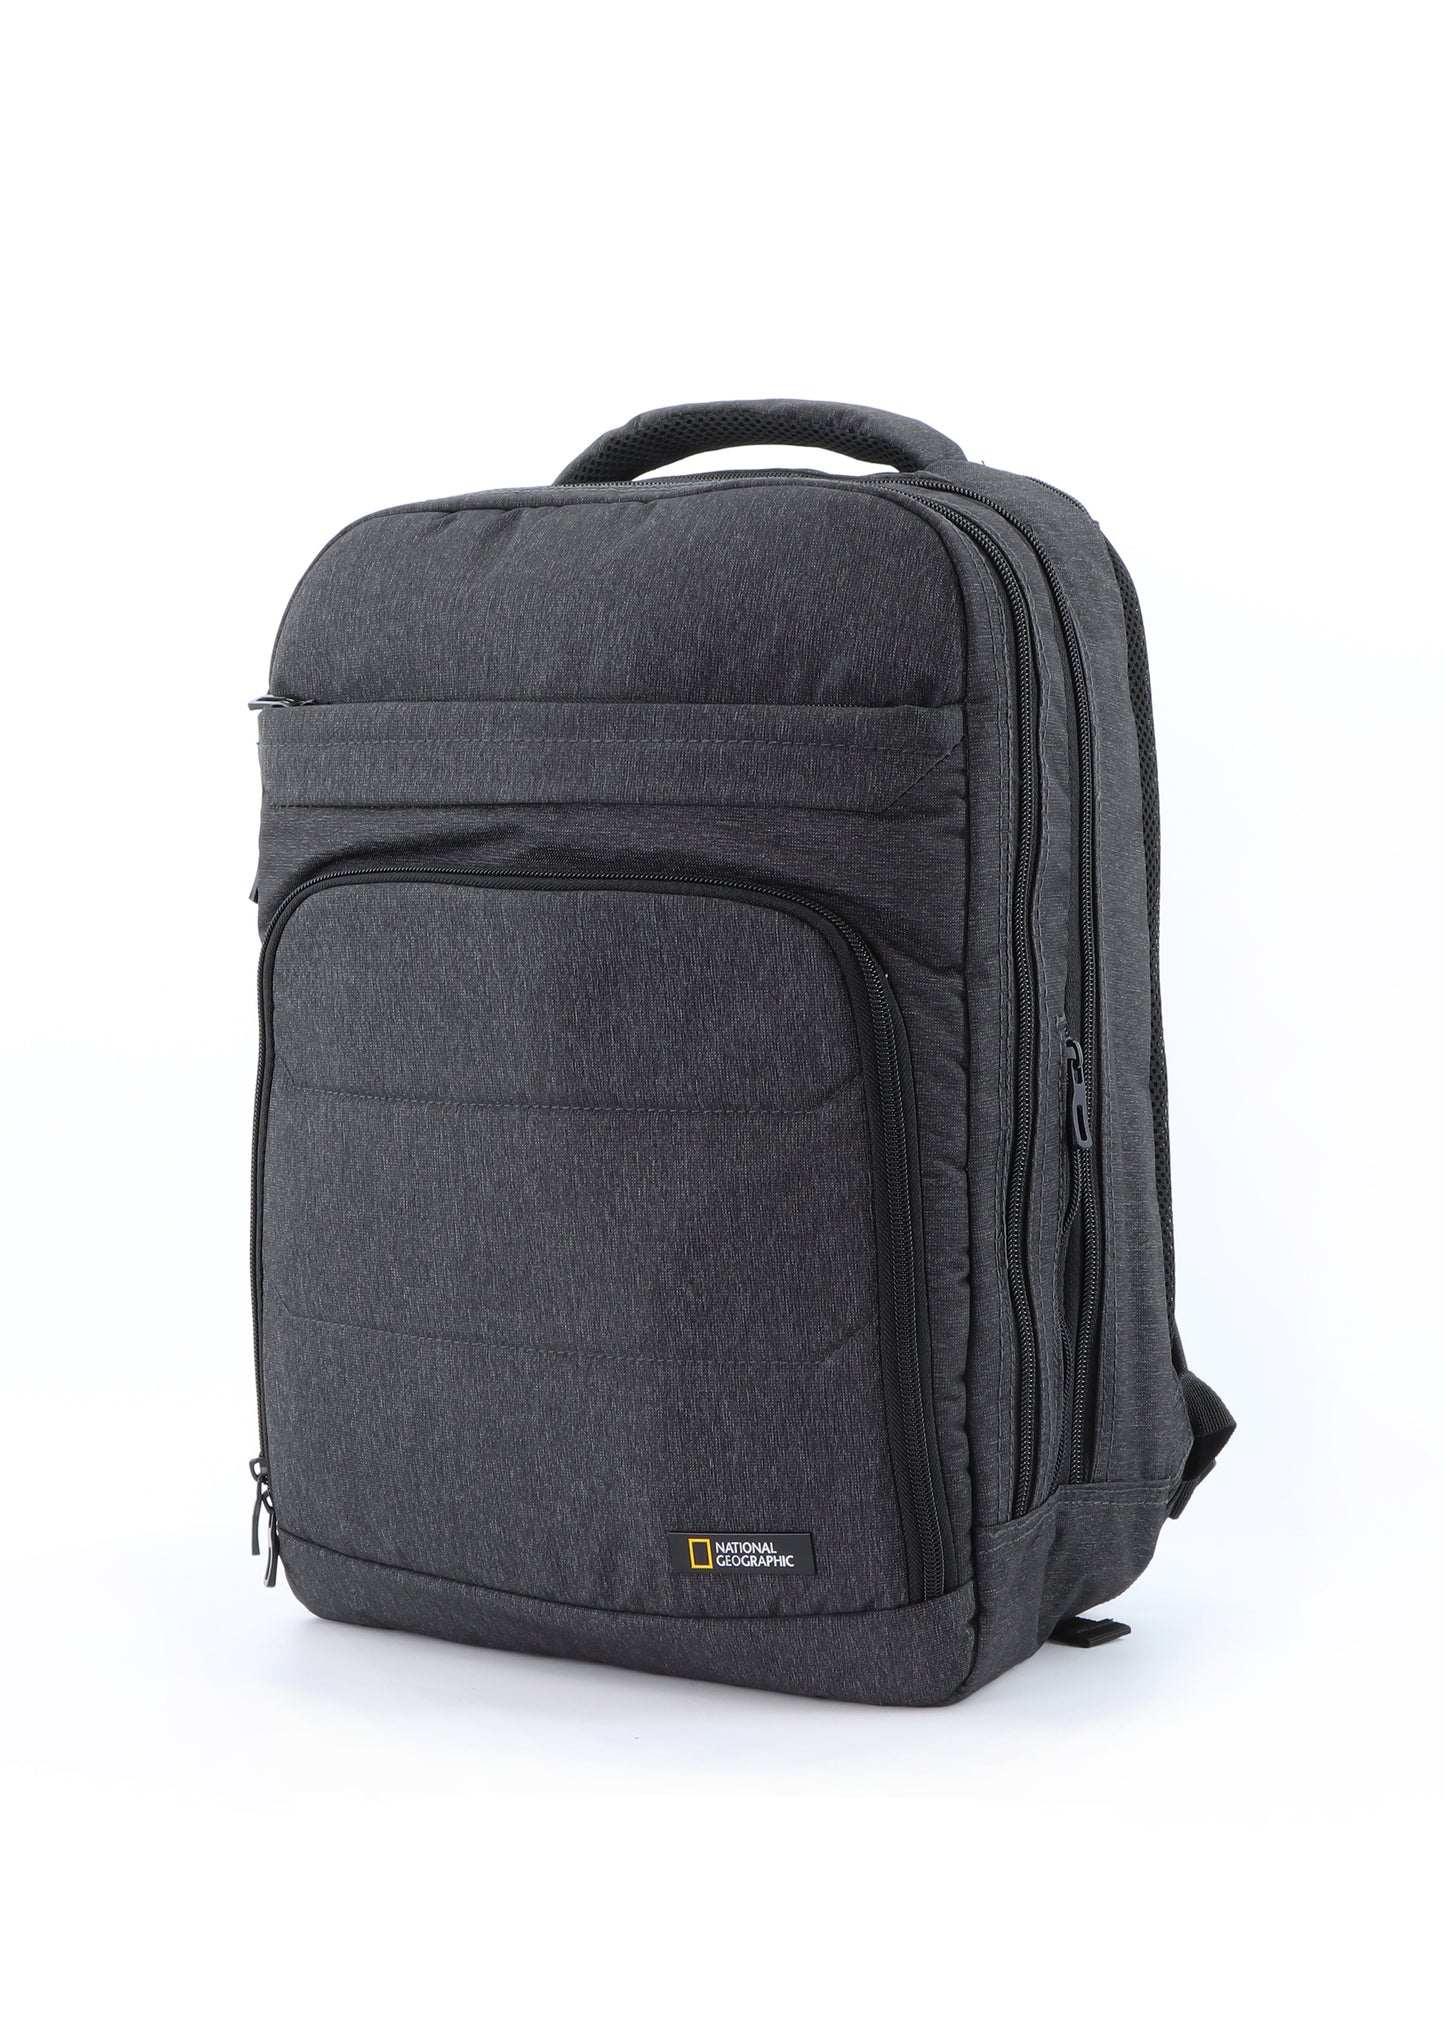 National Geographic Pro - Voorkant 2-Tone Grijs laptop rugzak | luggage4u.be